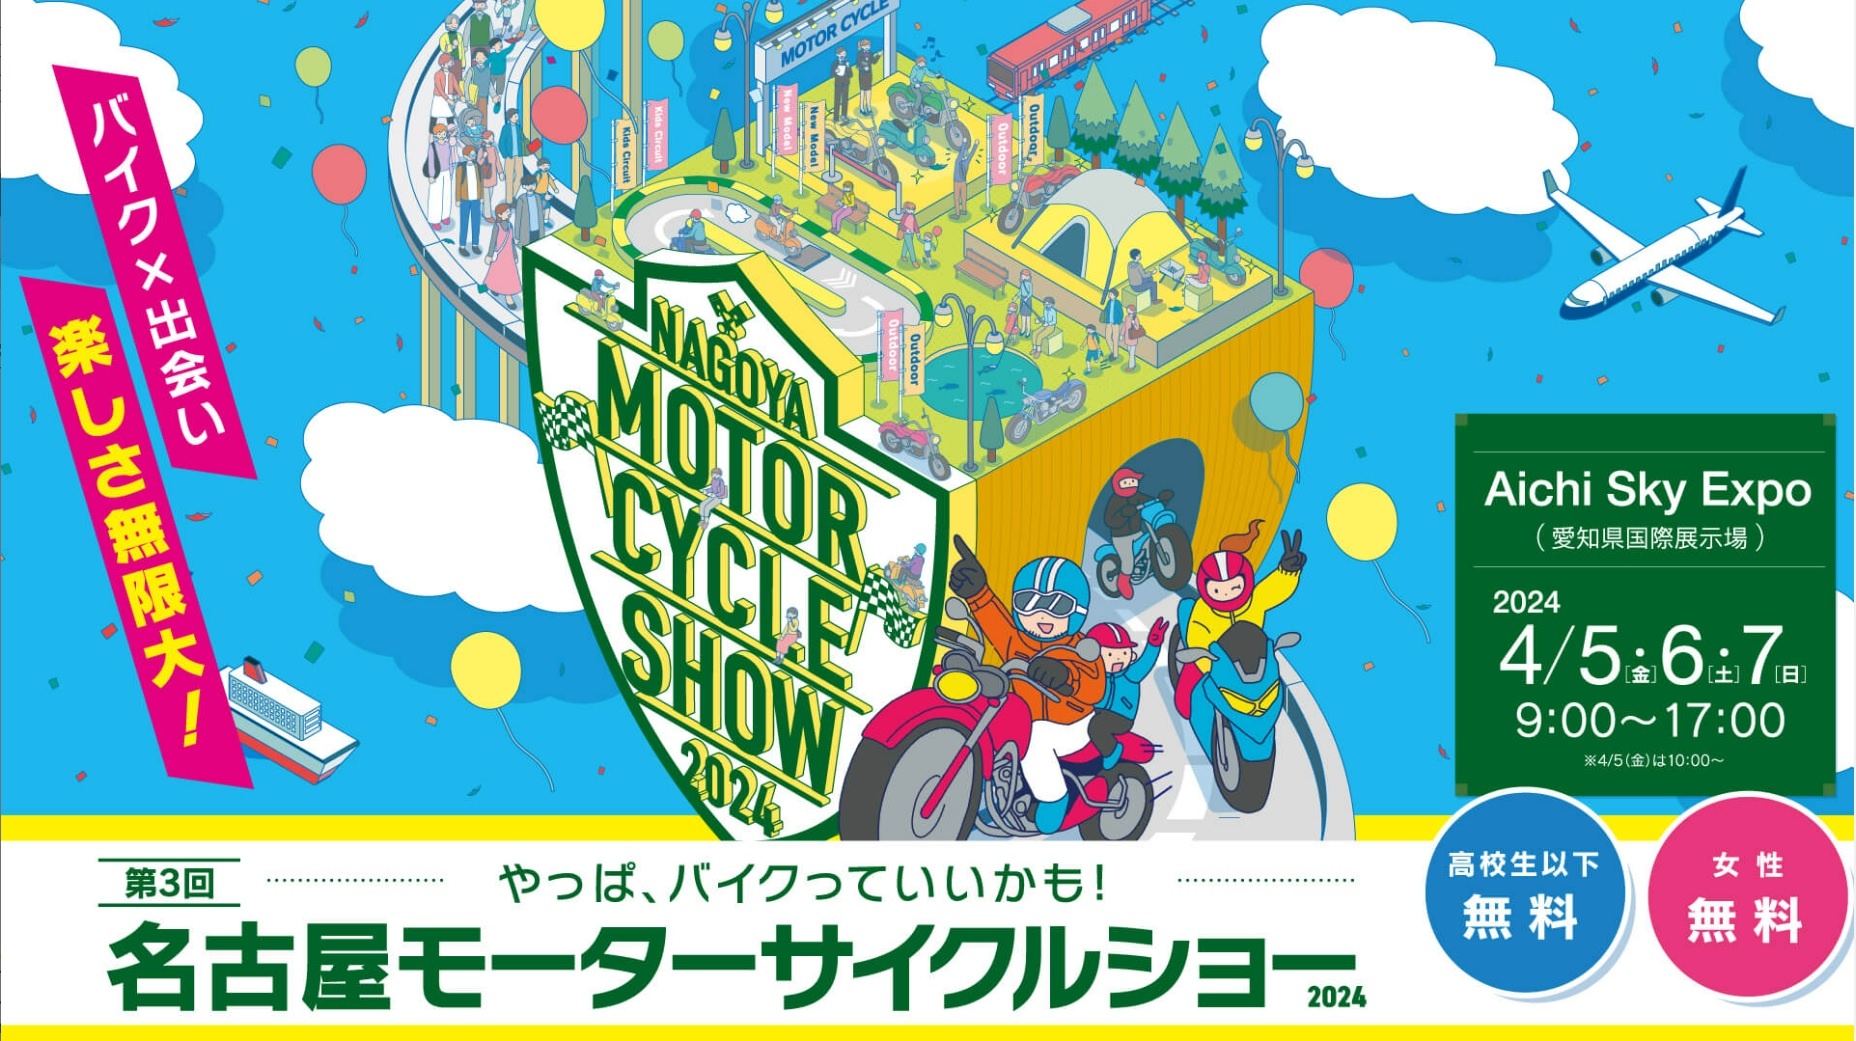 NAGOYA MOTOR CYCLE SHOW 2024